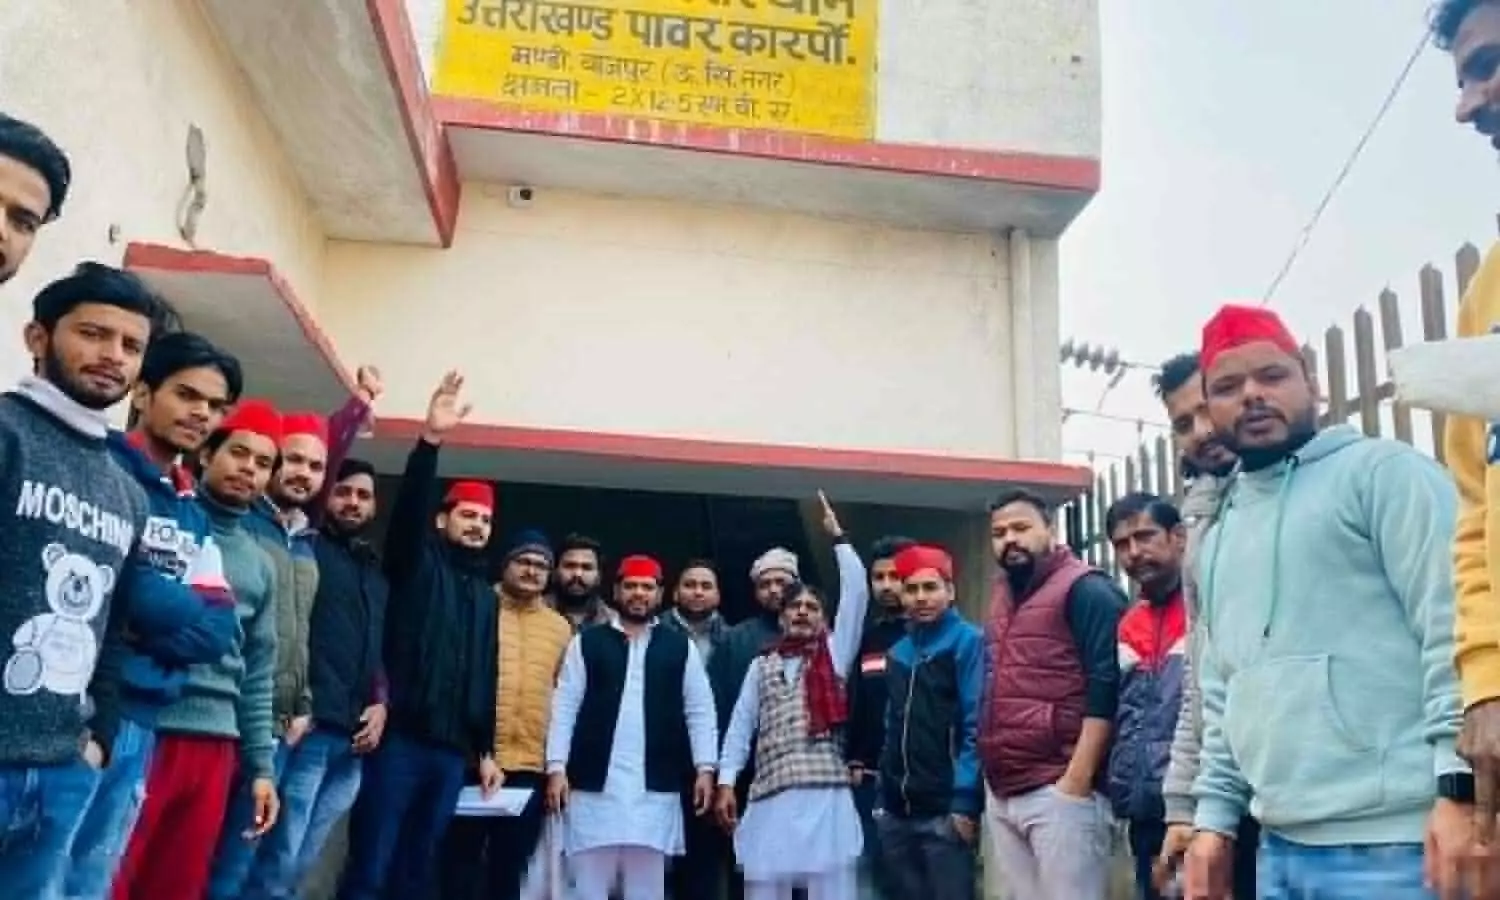 Samajwadi Party workers picket in Uttarakhand